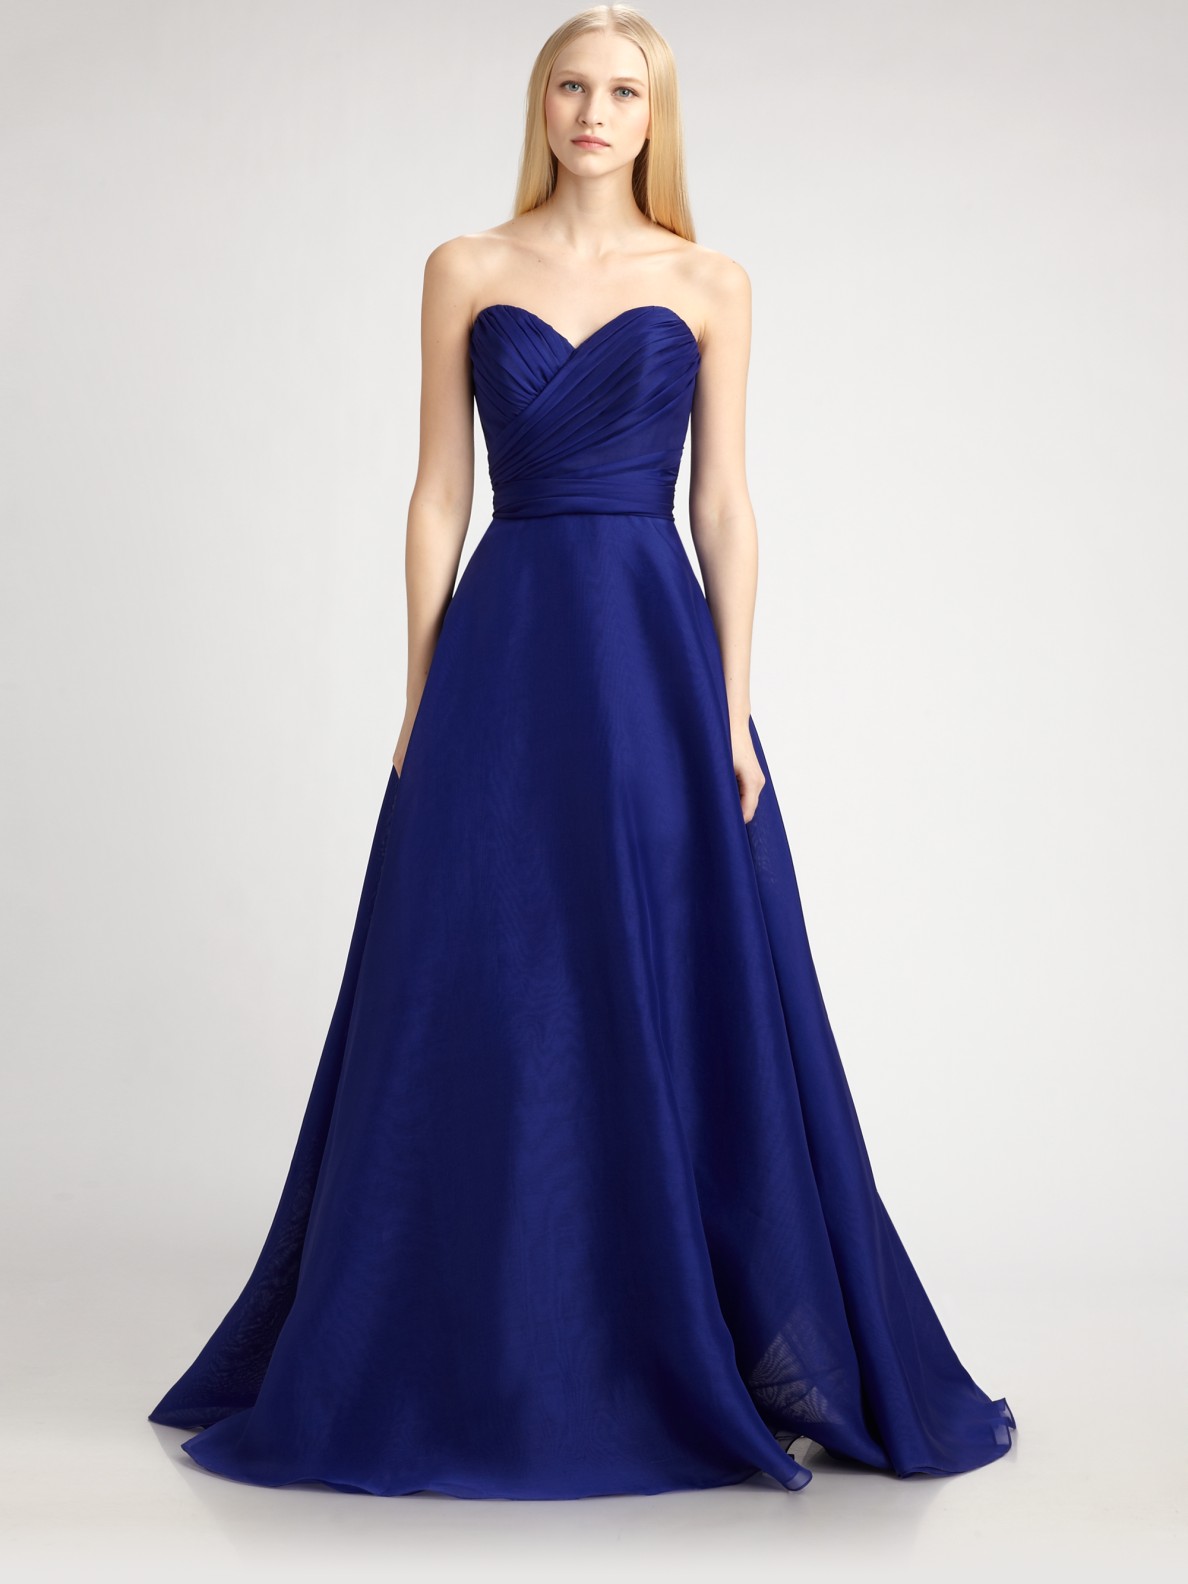 Lyst - Theia Silk Organza Ball Gown in Blue